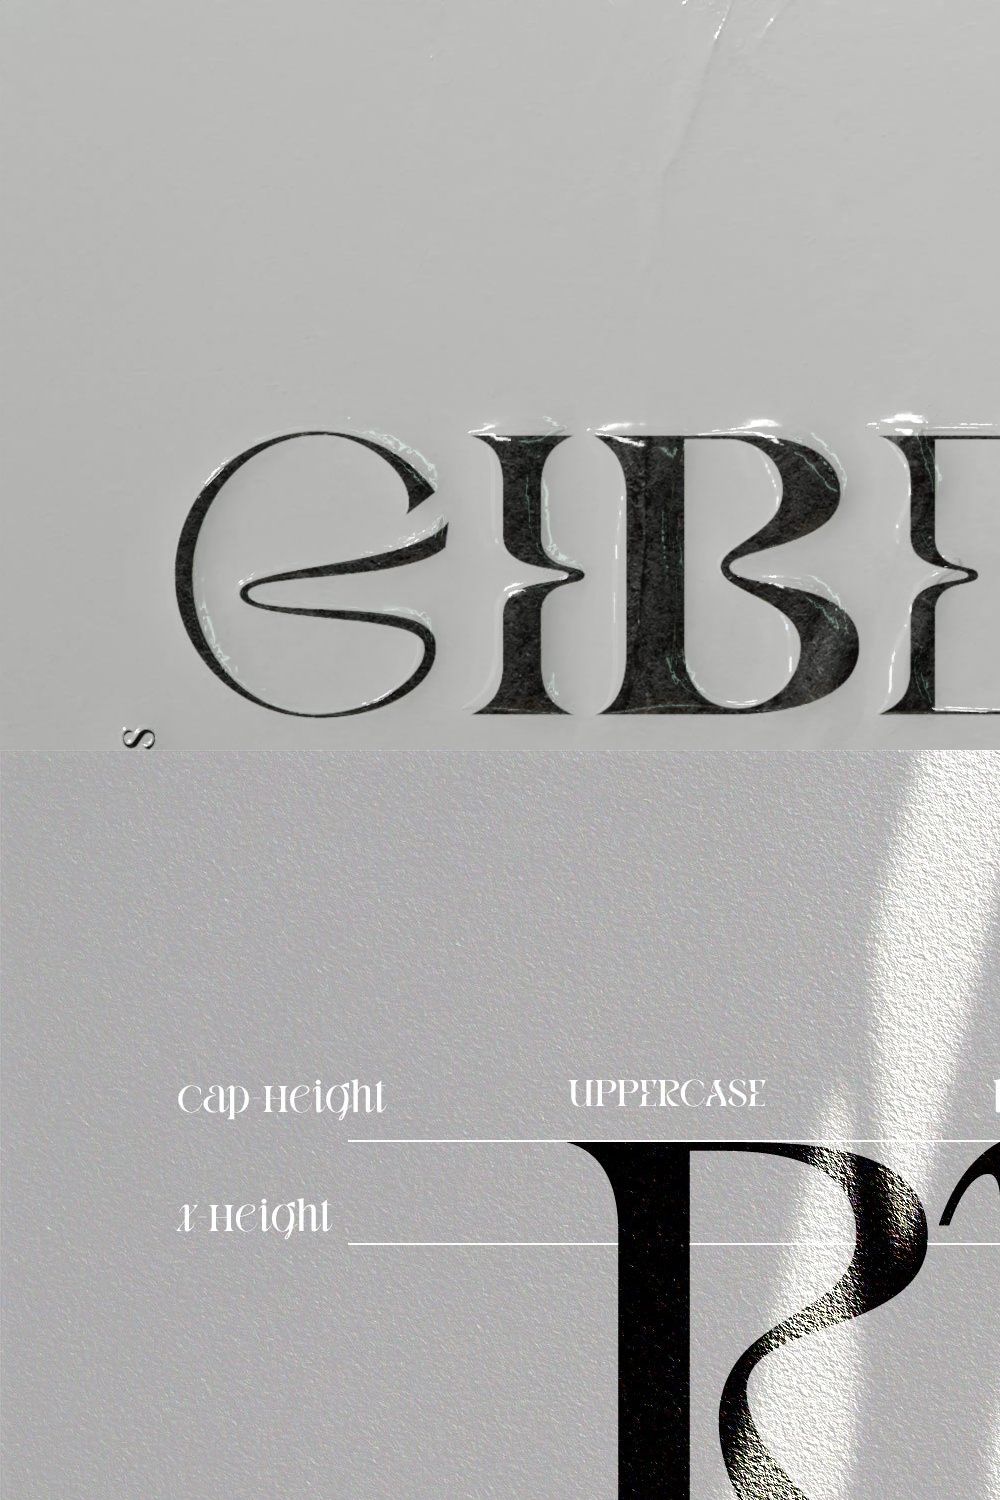 GIBEon Display Serif Family pinterest preview image.